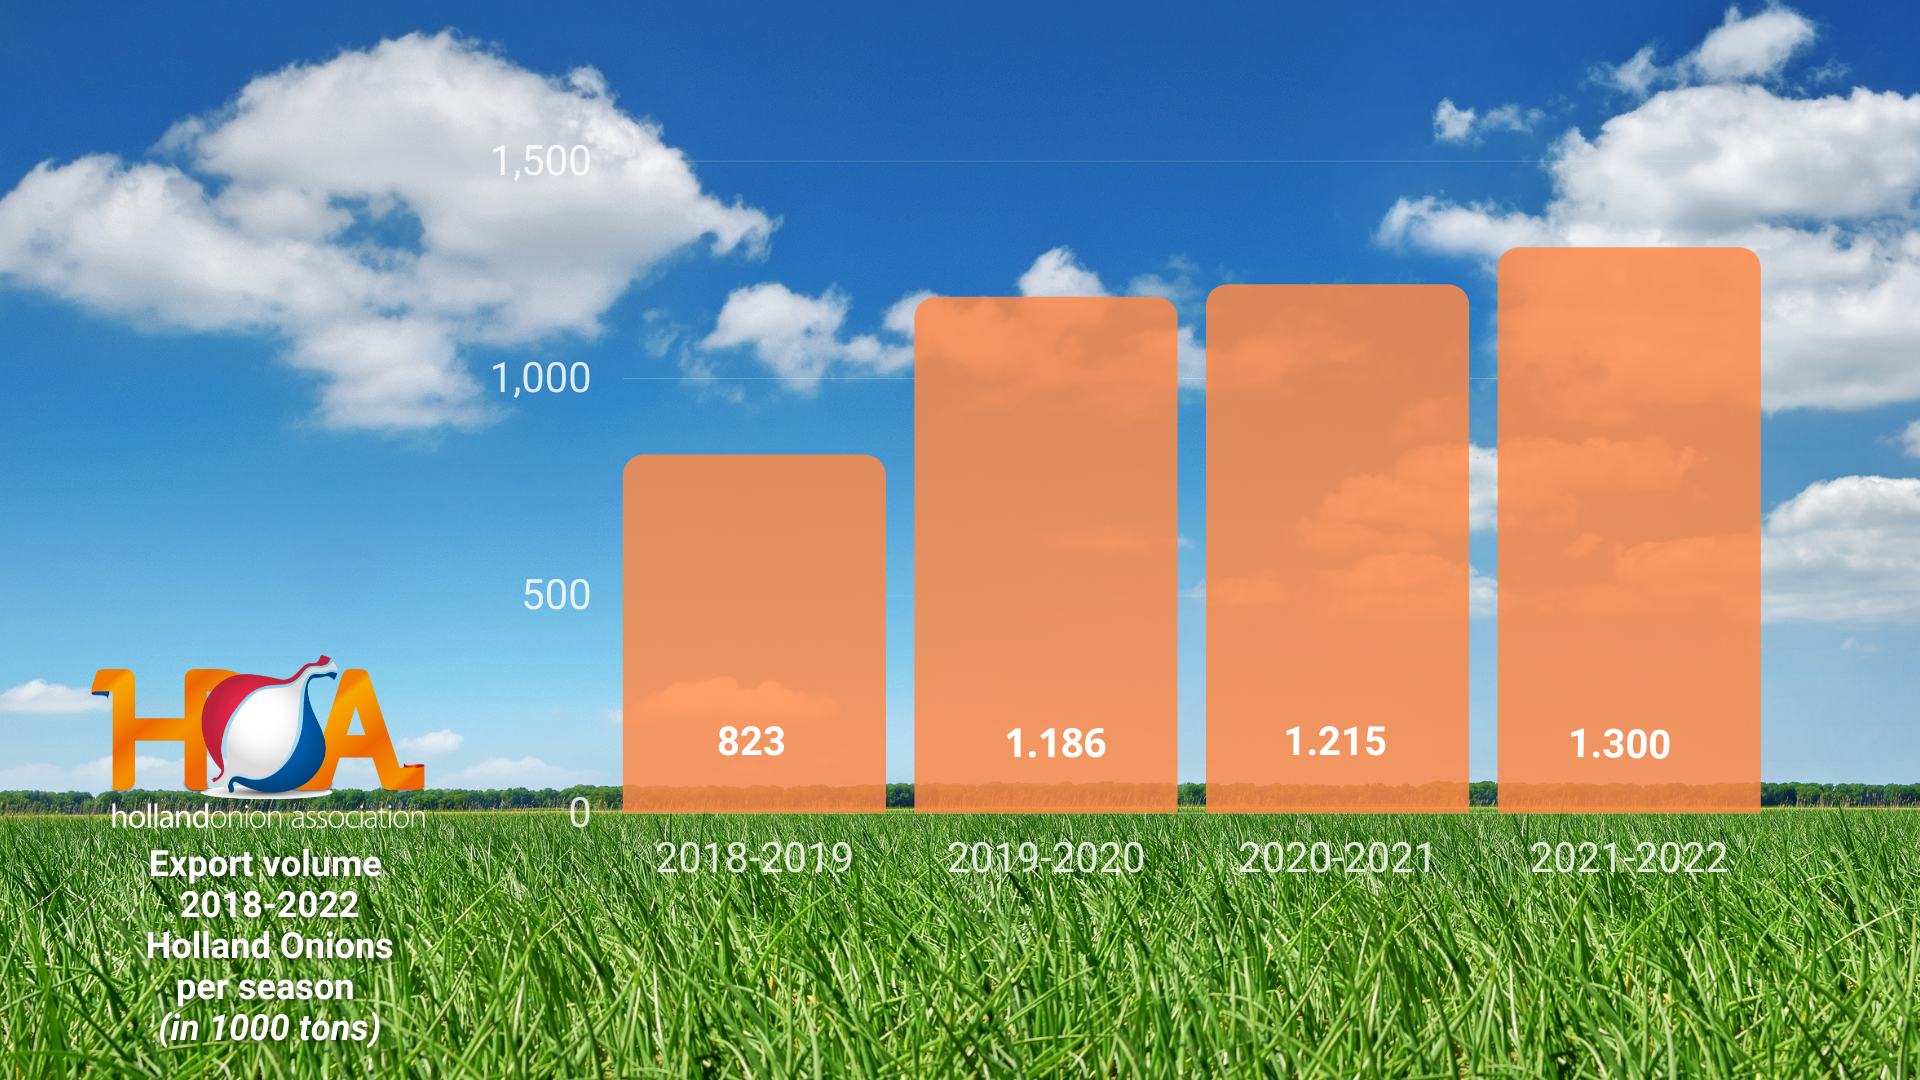 HOA_Onion export figures 2018-2022